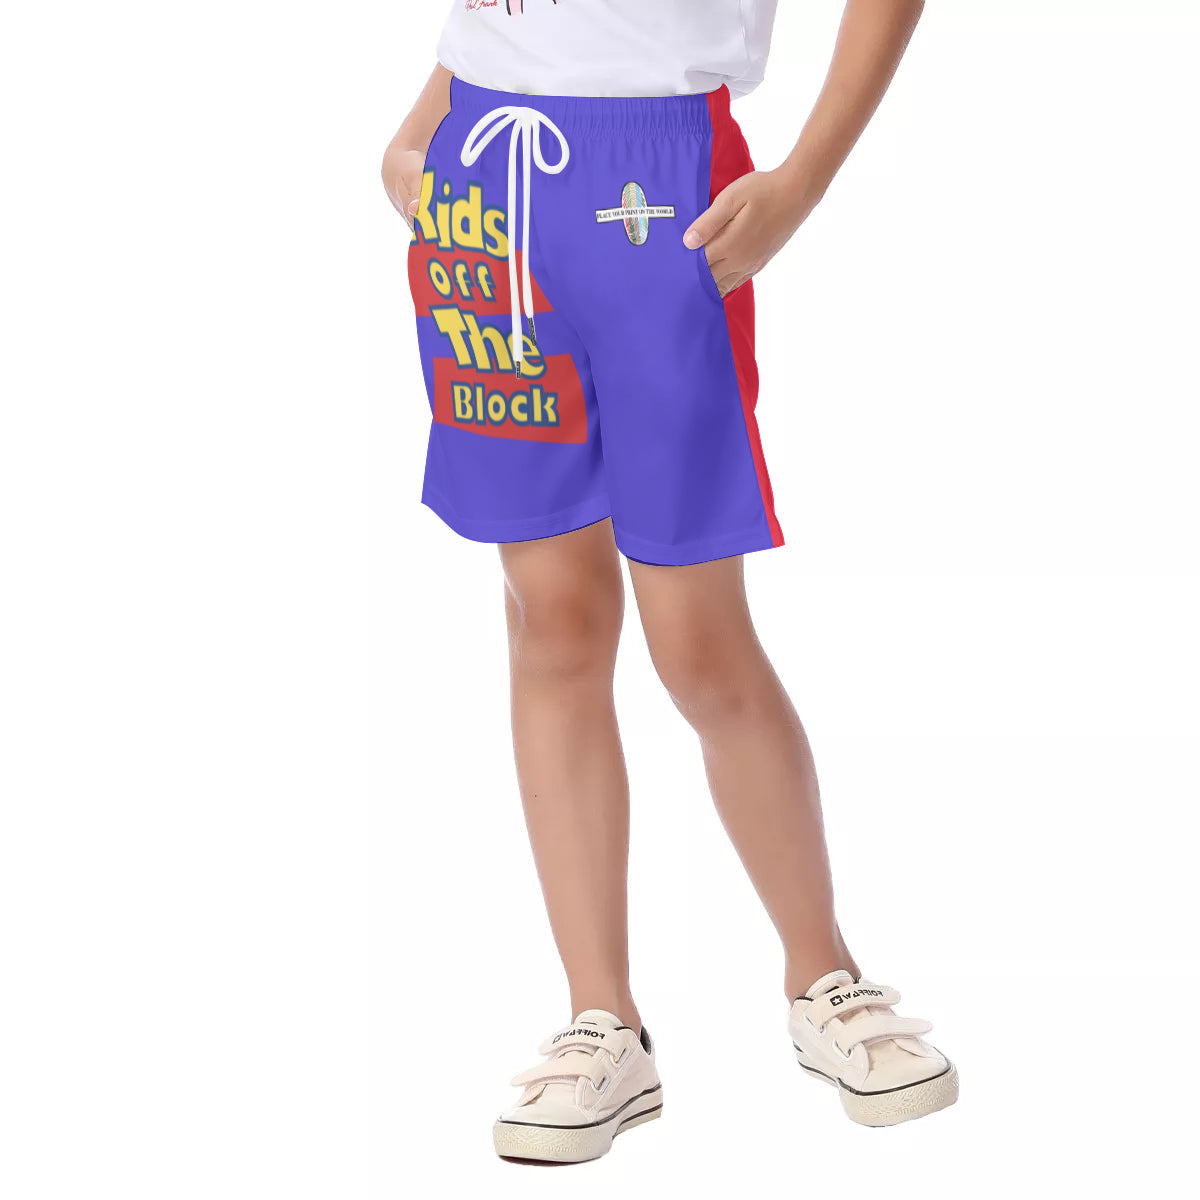 Kids Off The Block (Toy Story) | Beach Shorts | Sky Lyfe